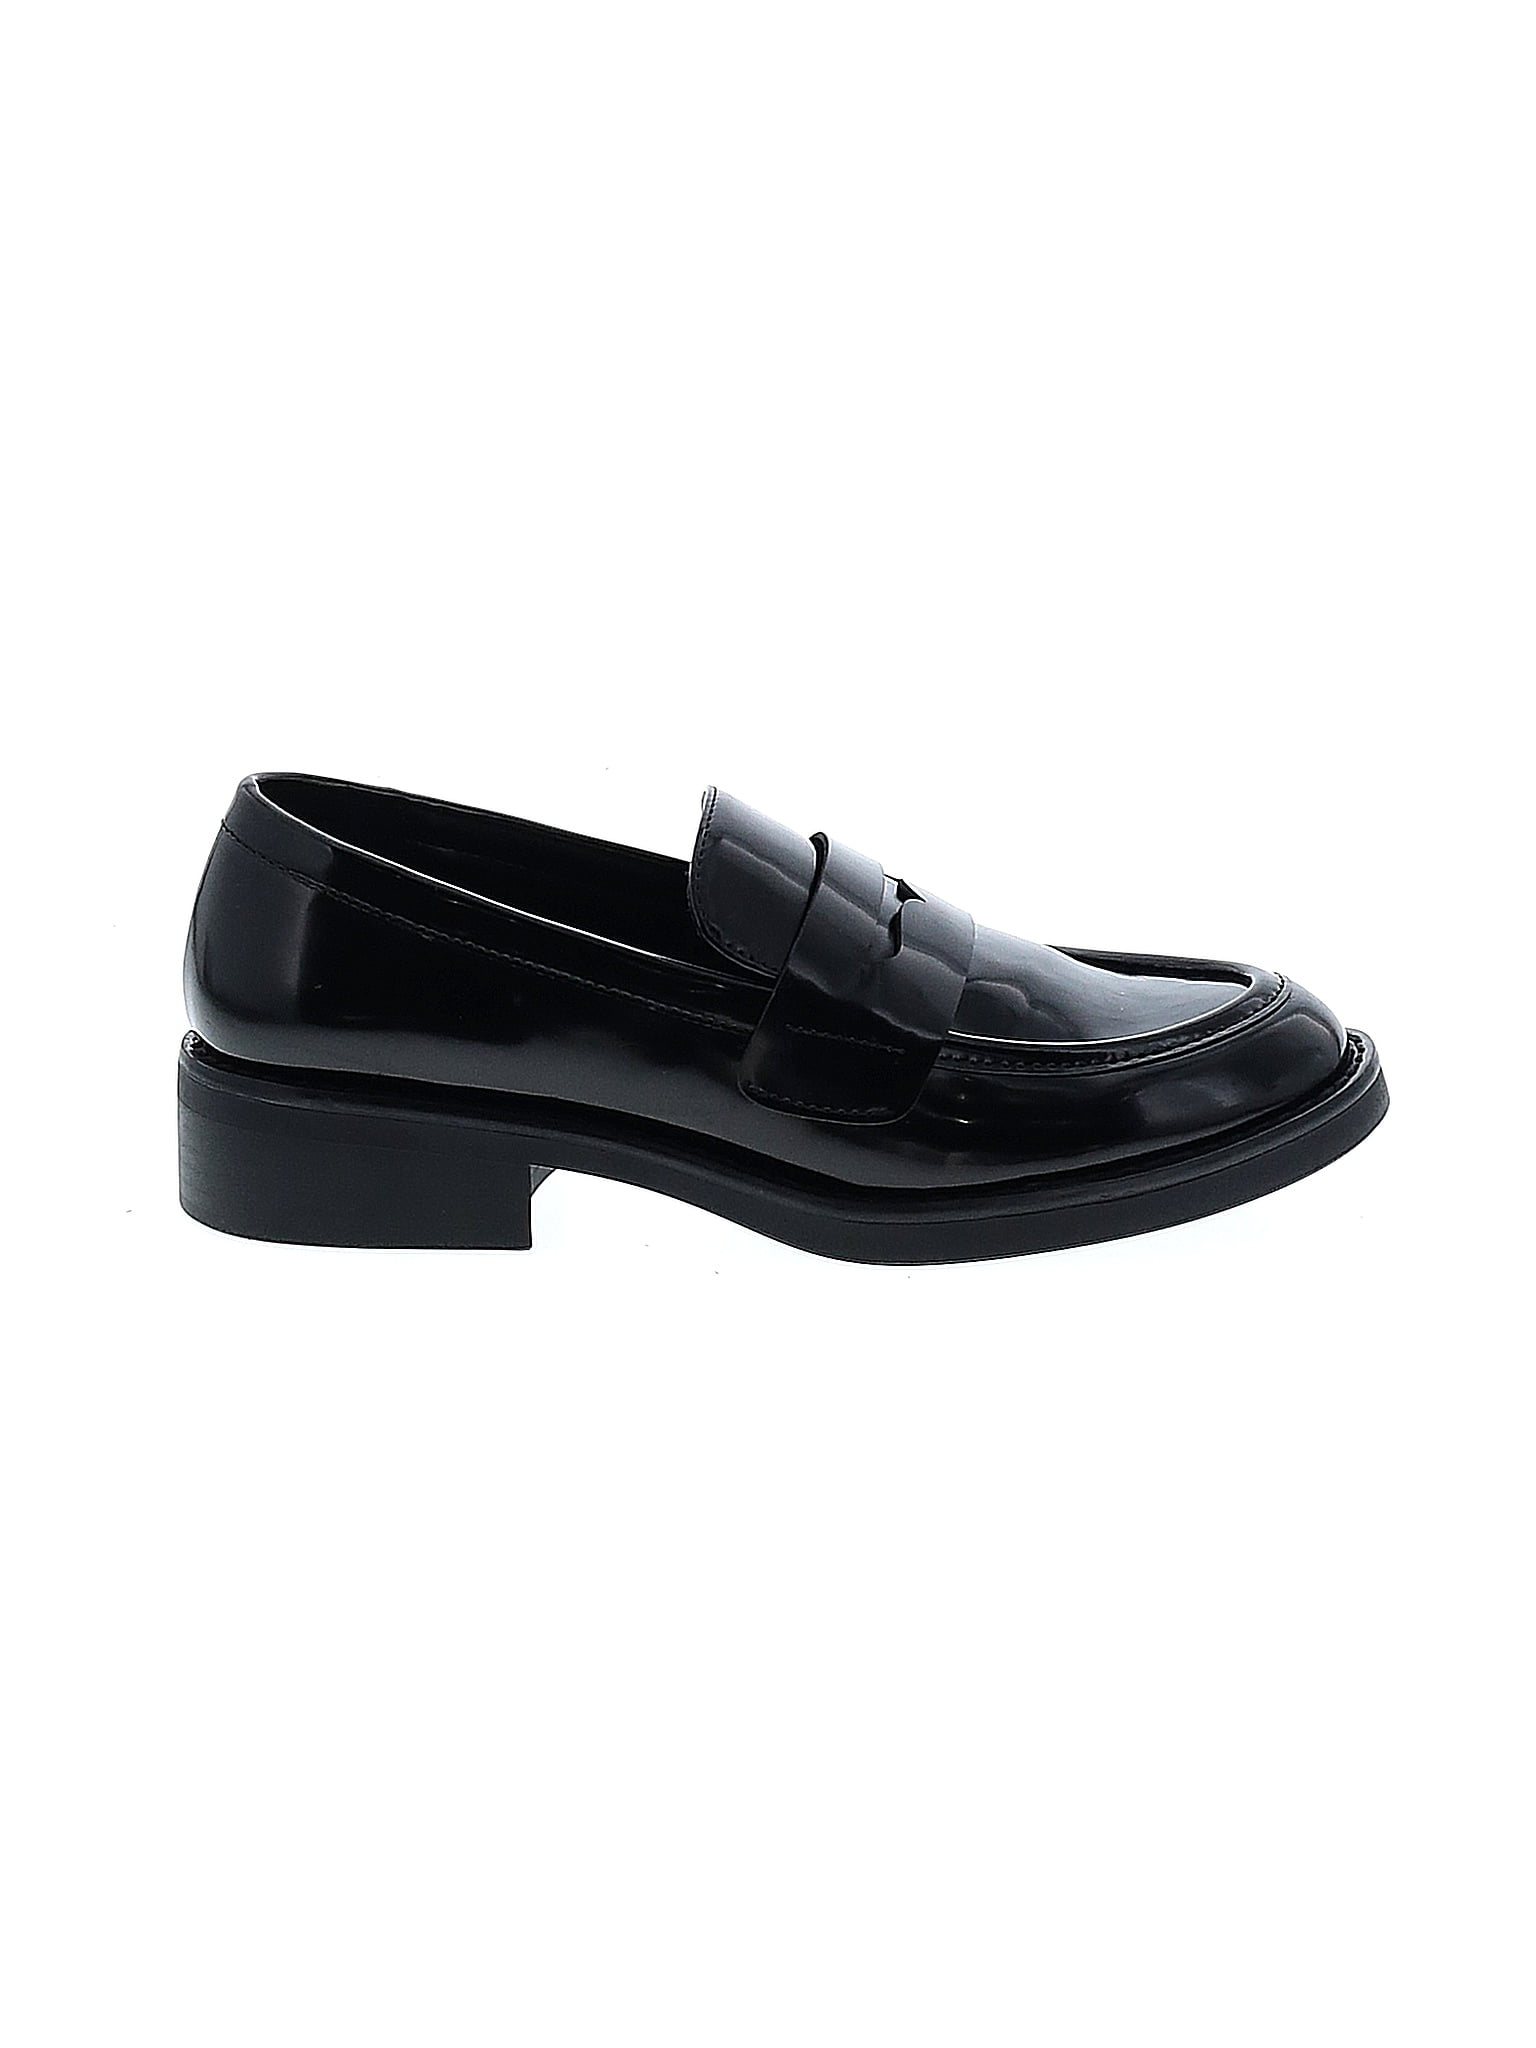 Madden Girl Solid Black Flats Size 5 1/2 - 29% off | thredUP